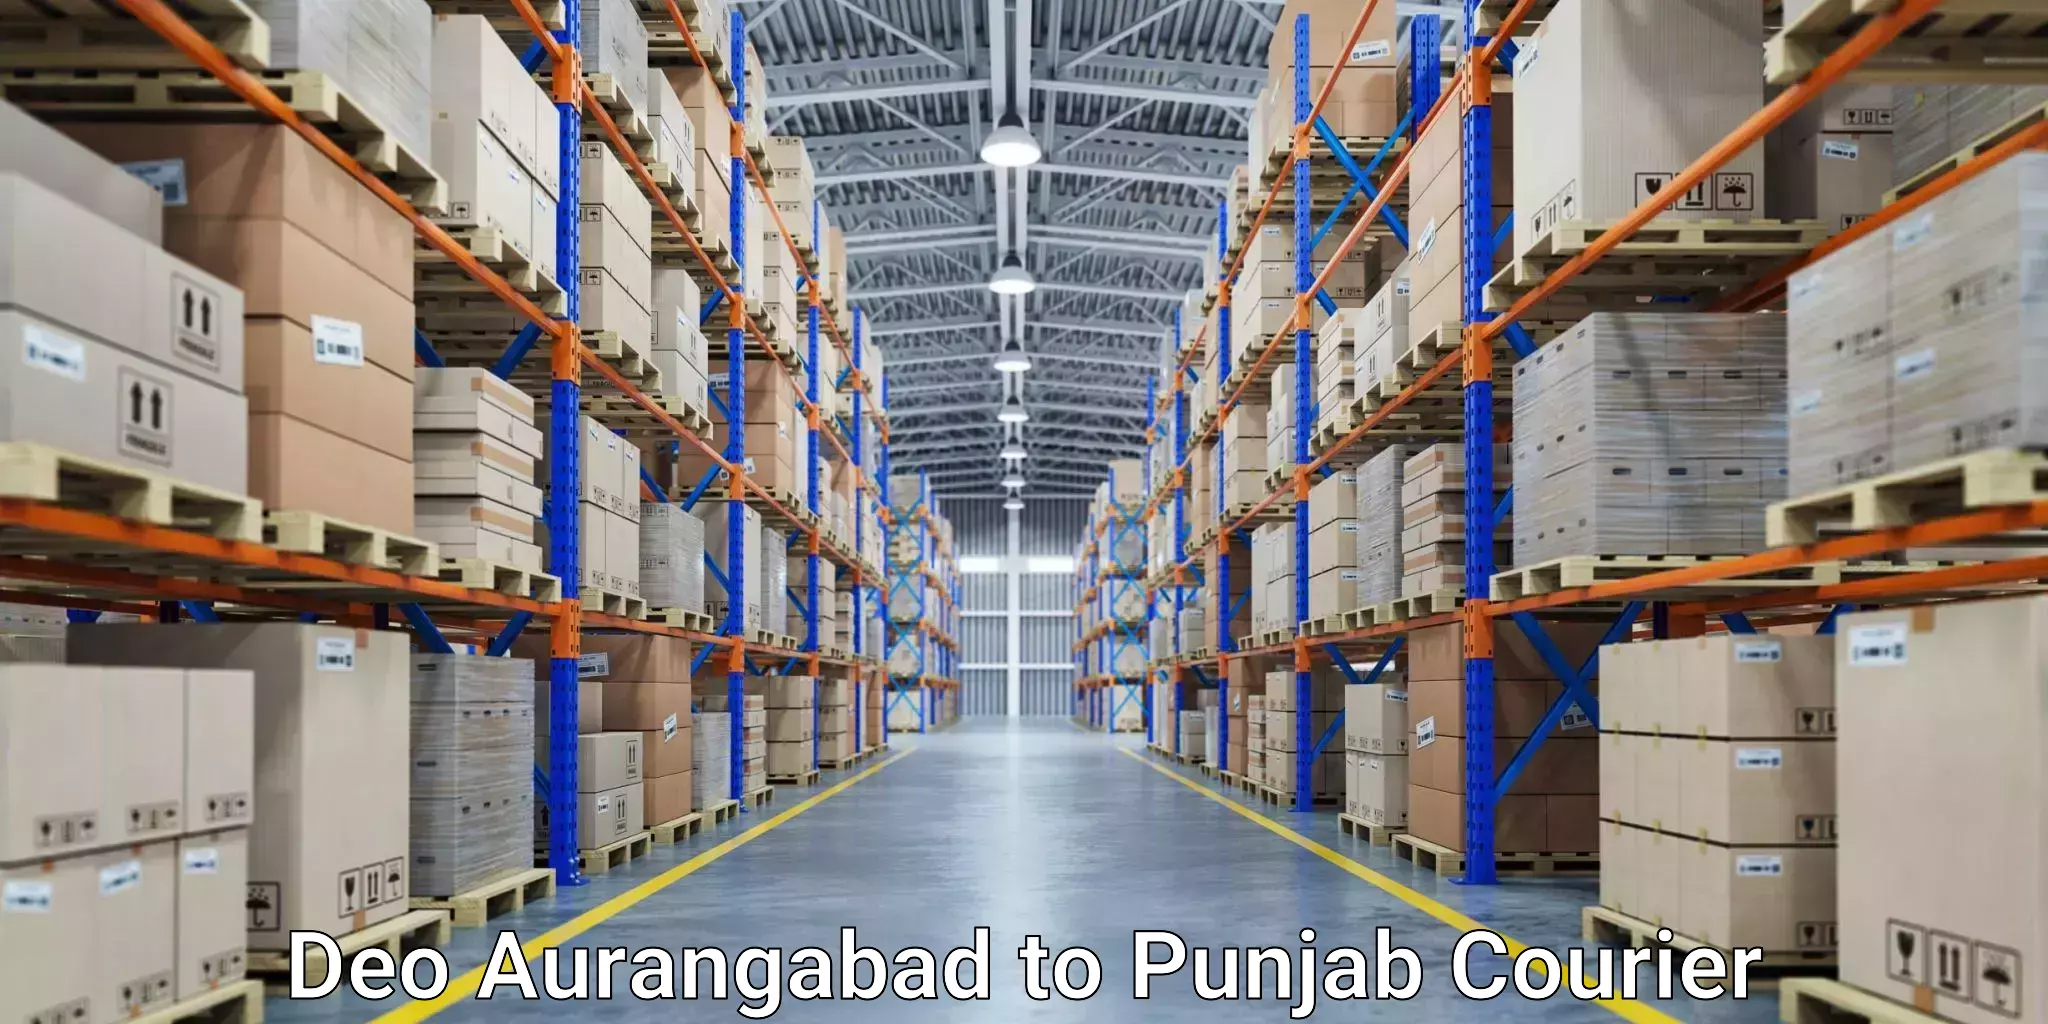 Customer-focused courier Deo Aurangabad to Bathinda